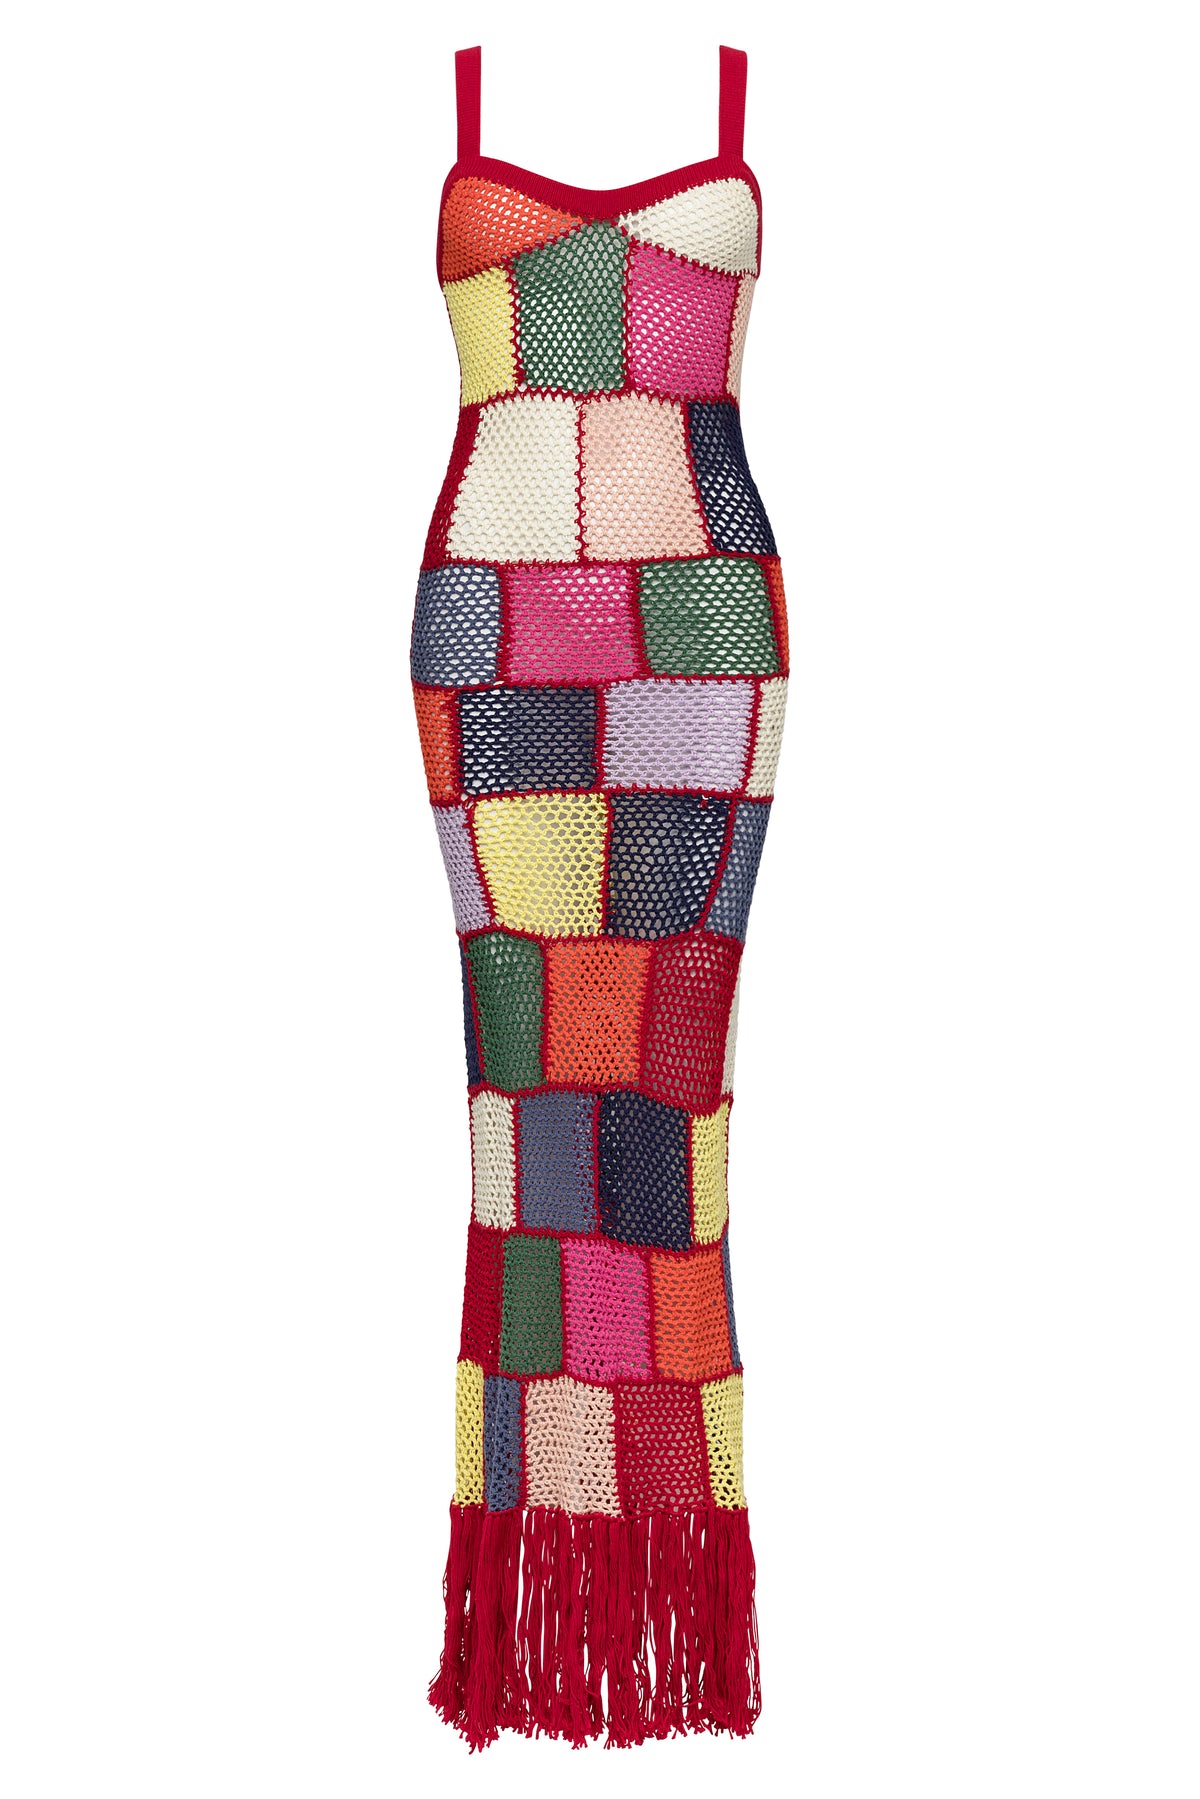 Vera Crochet Dress - Carolina K